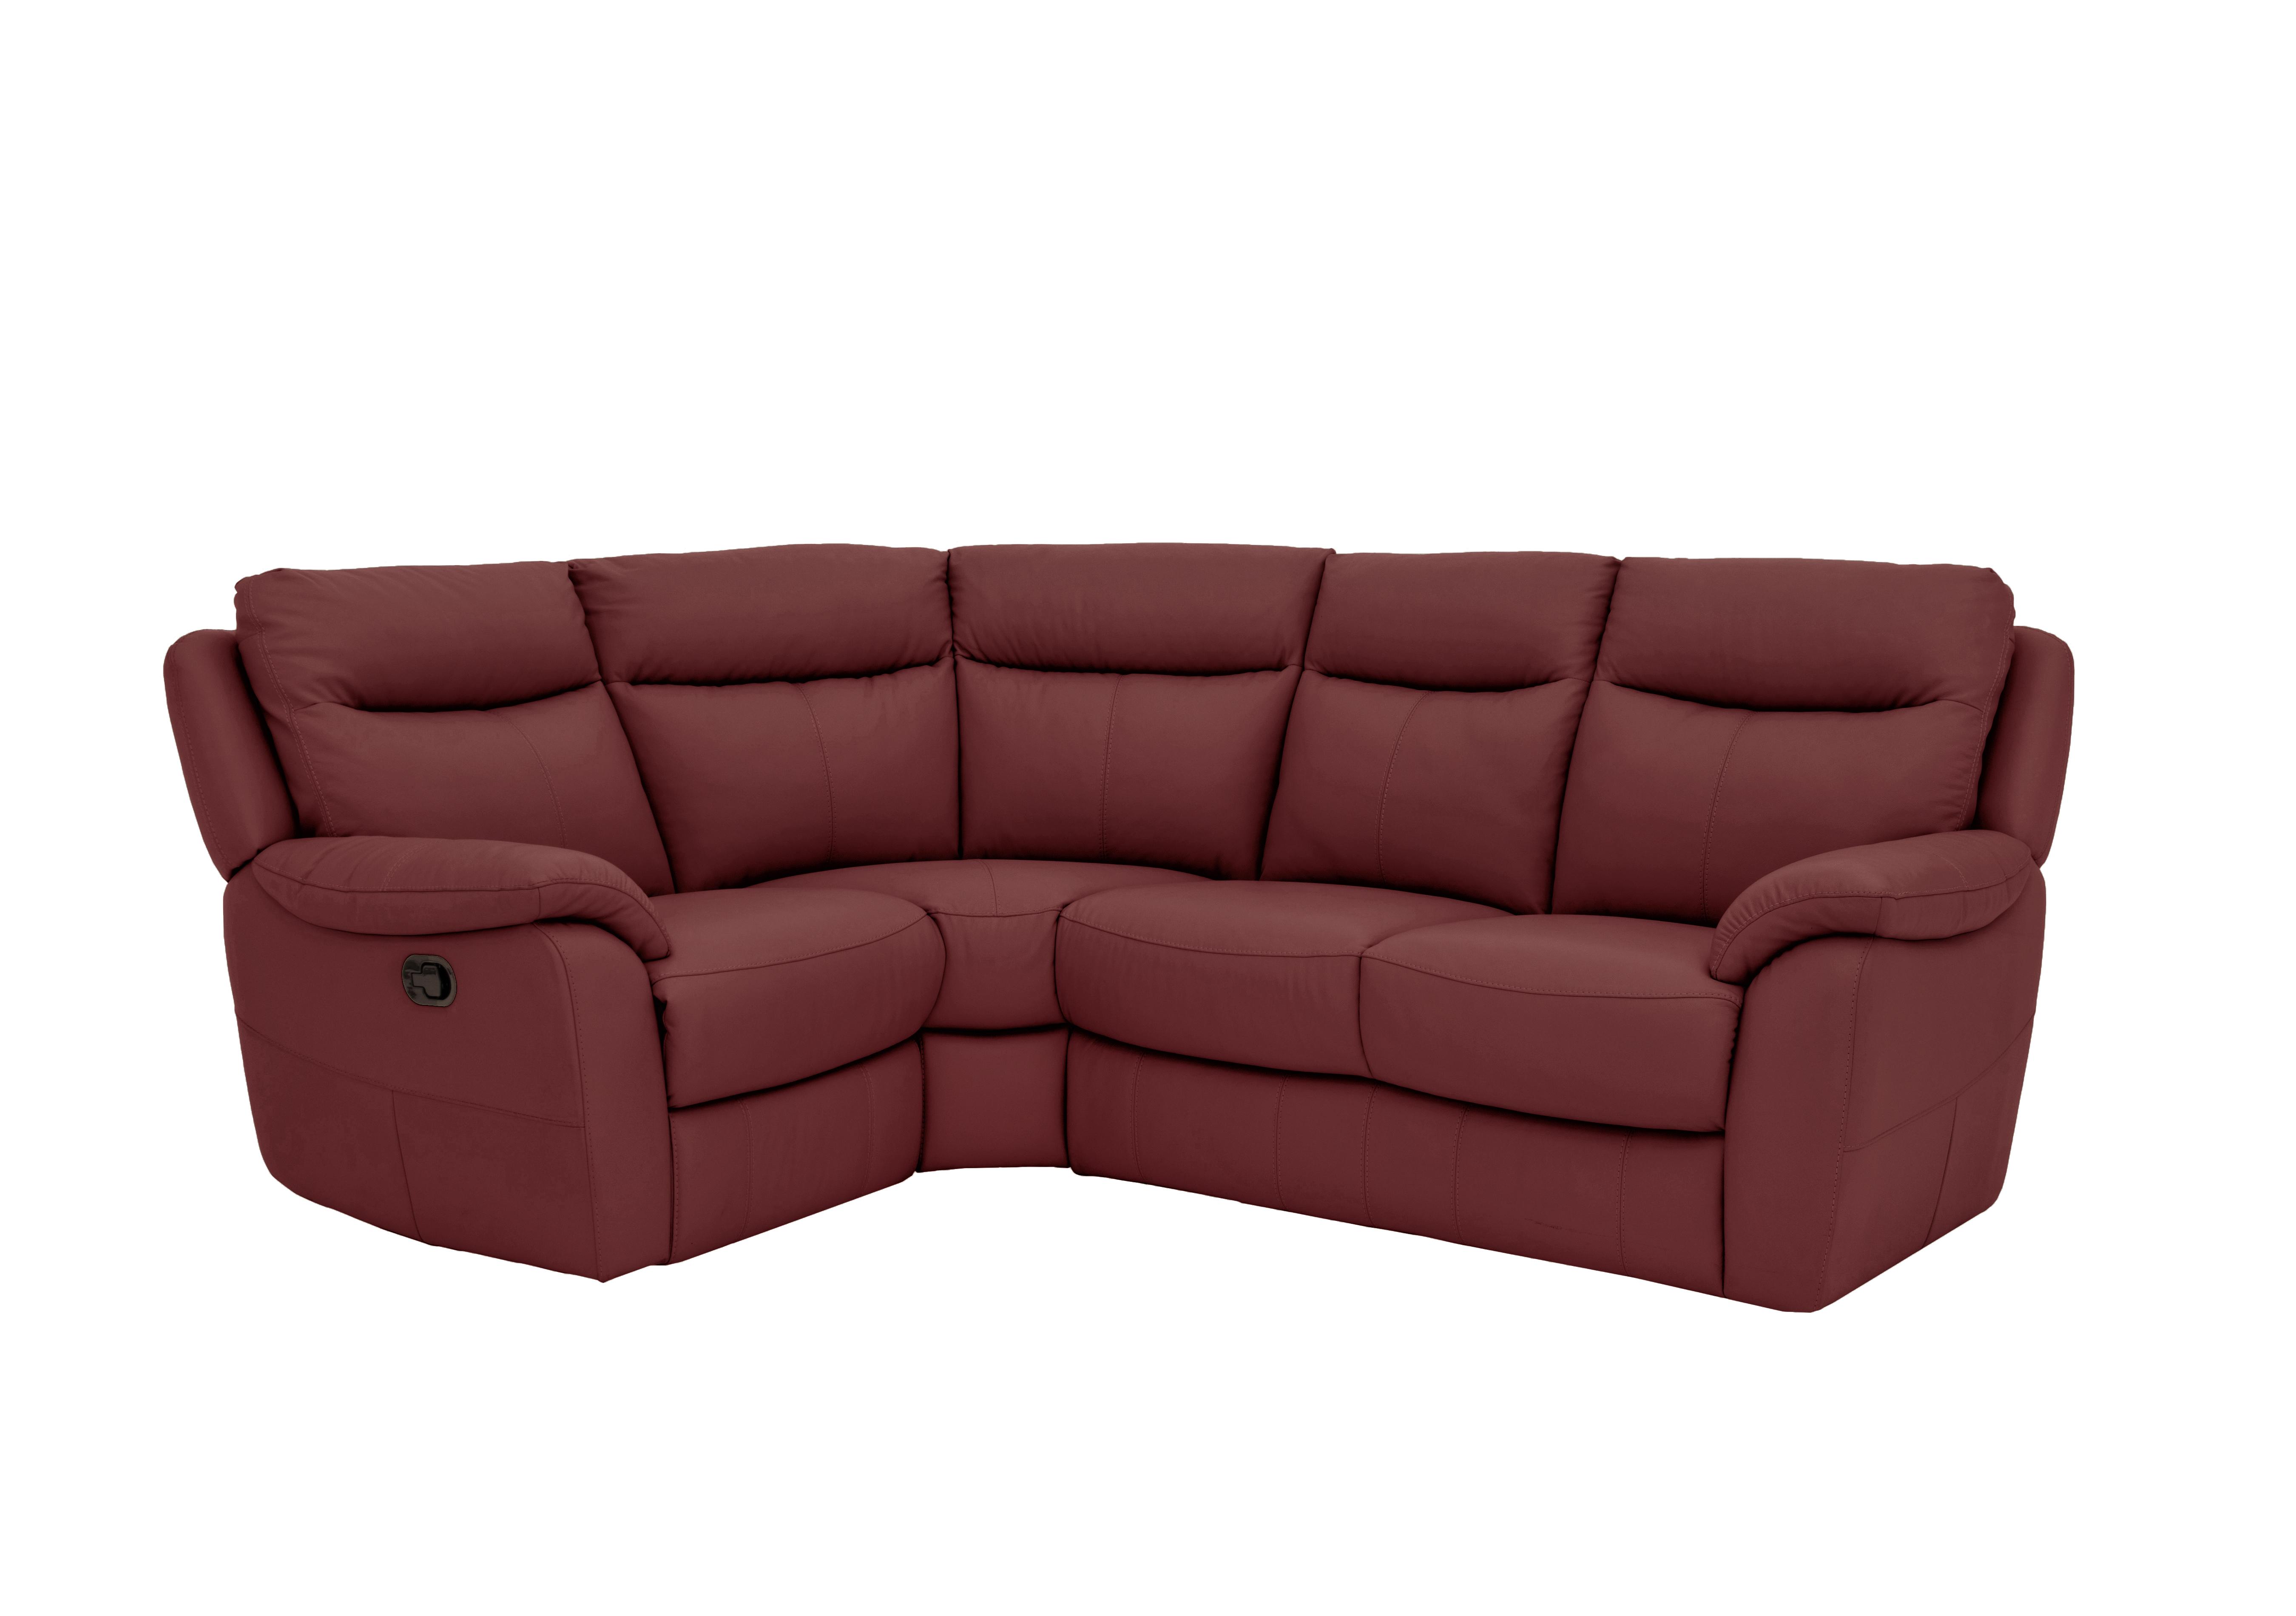 Snug Compact Leather Corner Sofa in Bv-035c Deep Red on Furniture Village